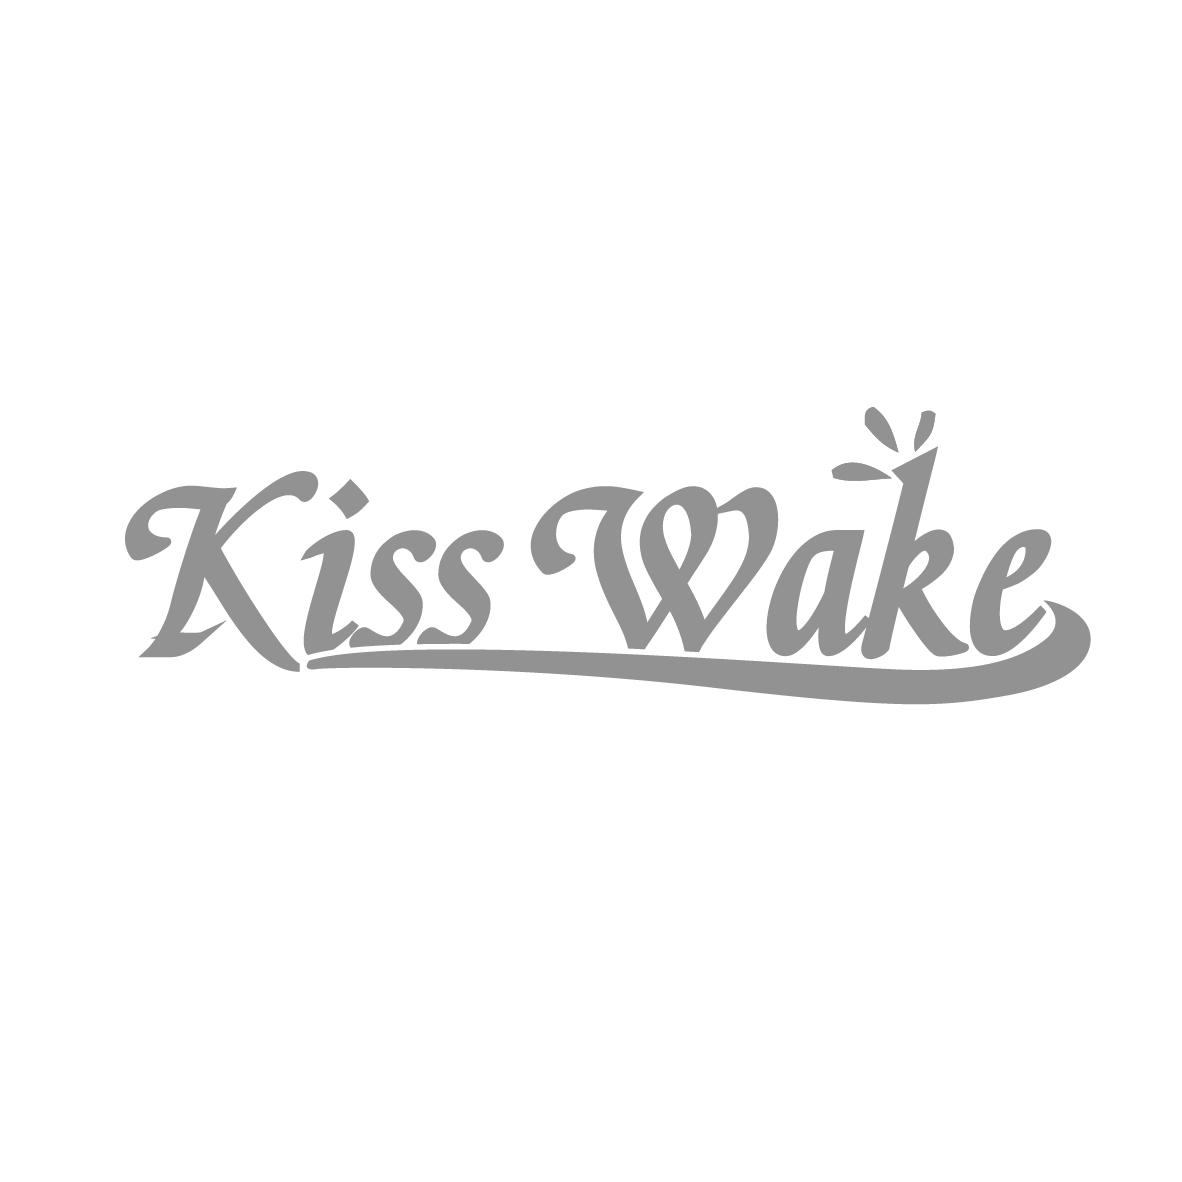 KISS WAKE